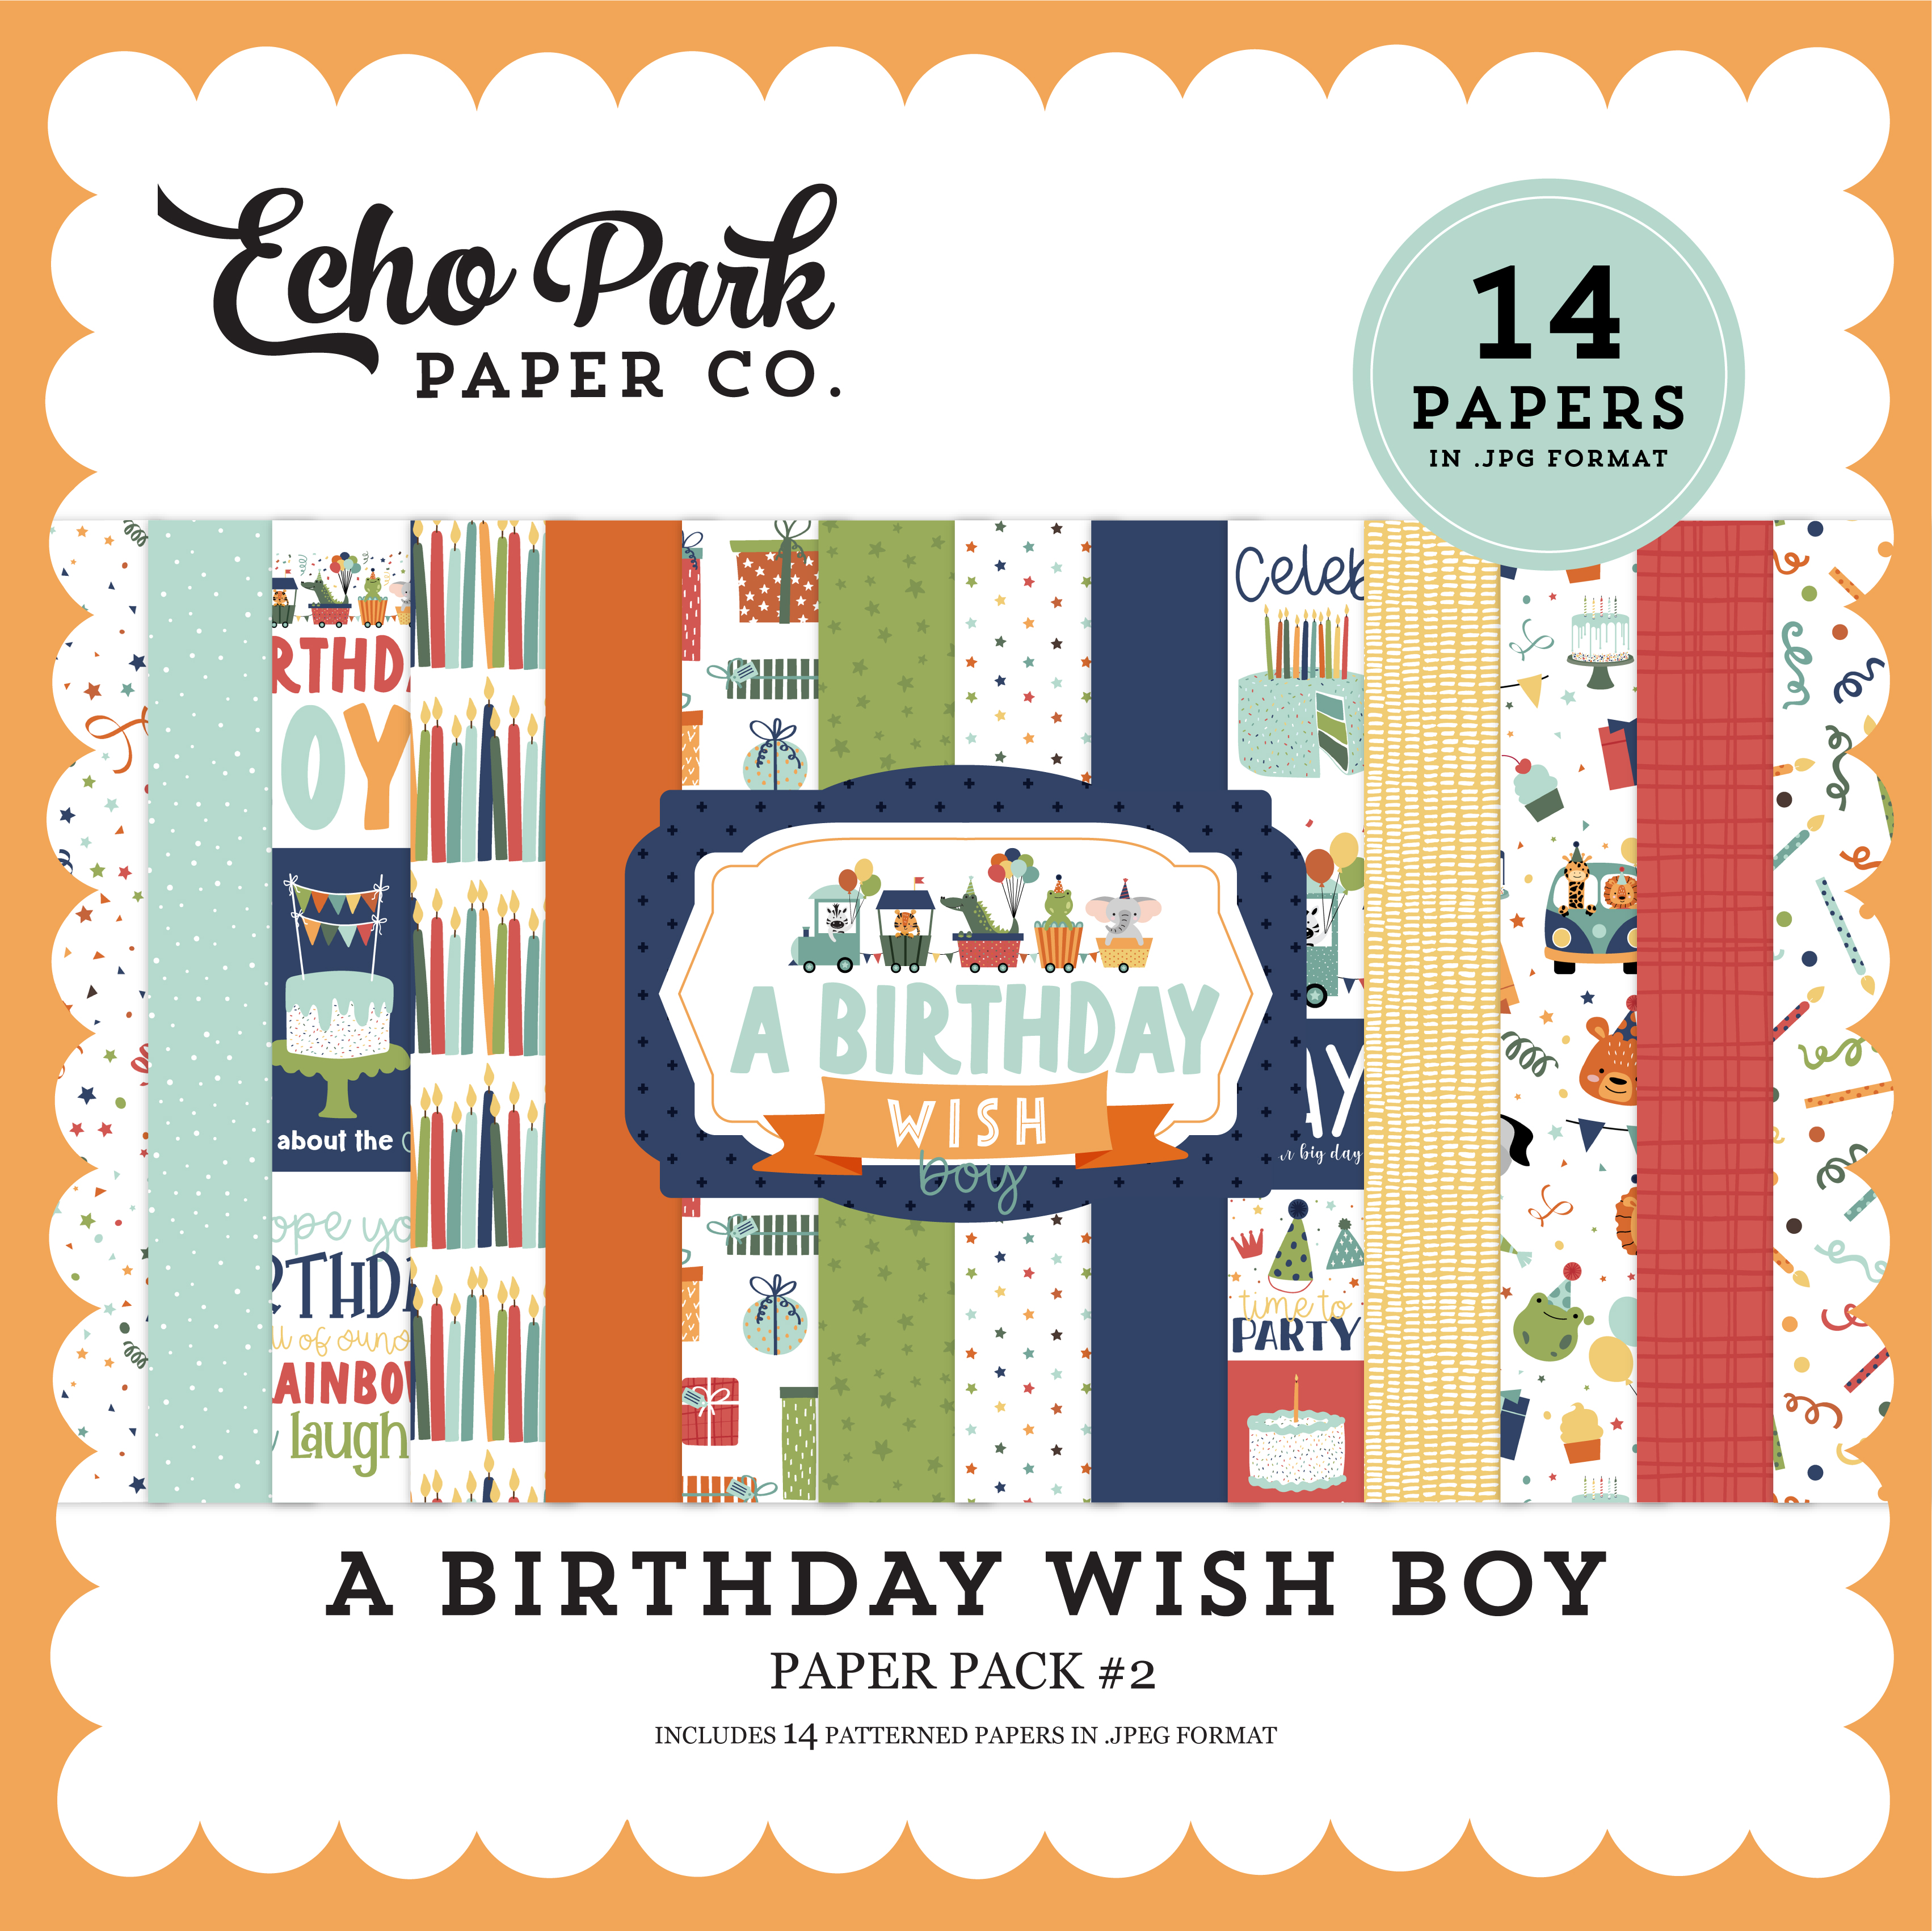 A Birthday Wish Boy Paper Pack #2